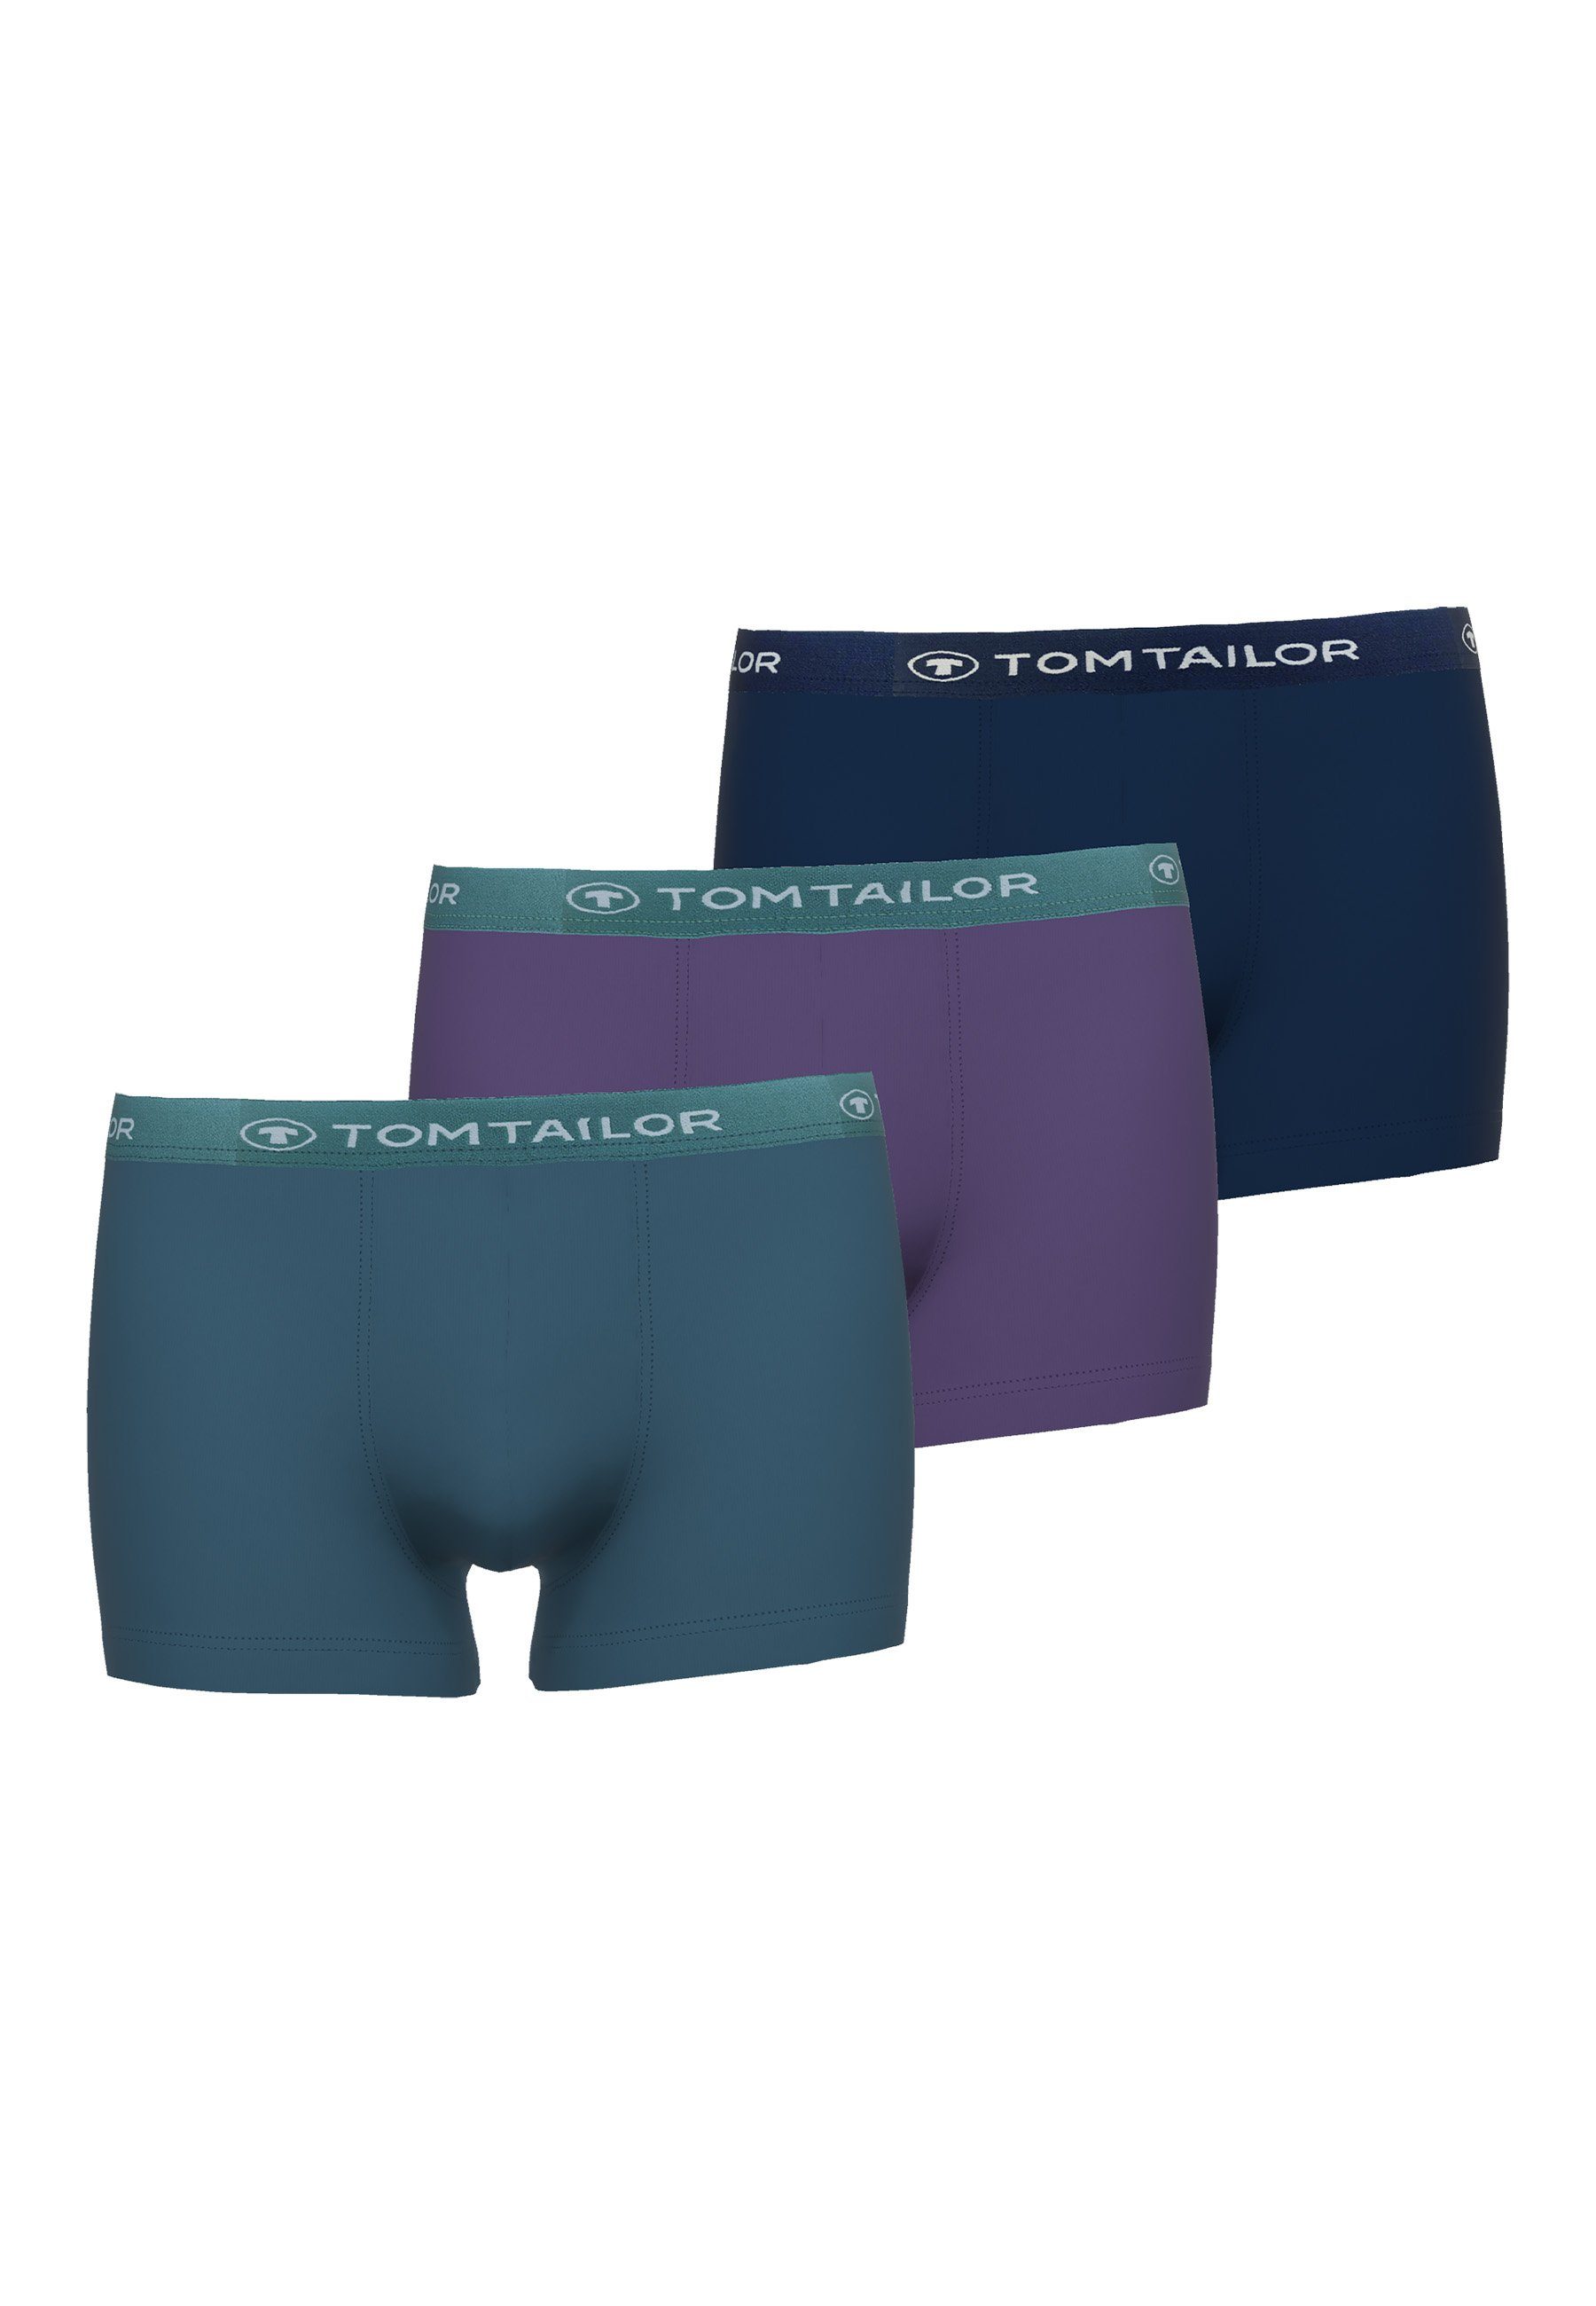 TOM TAILOR TOM 3er TAILOR Herren Pack lila Pants lila-dunkel-multicolor1 (3-St) Boxershorts uni